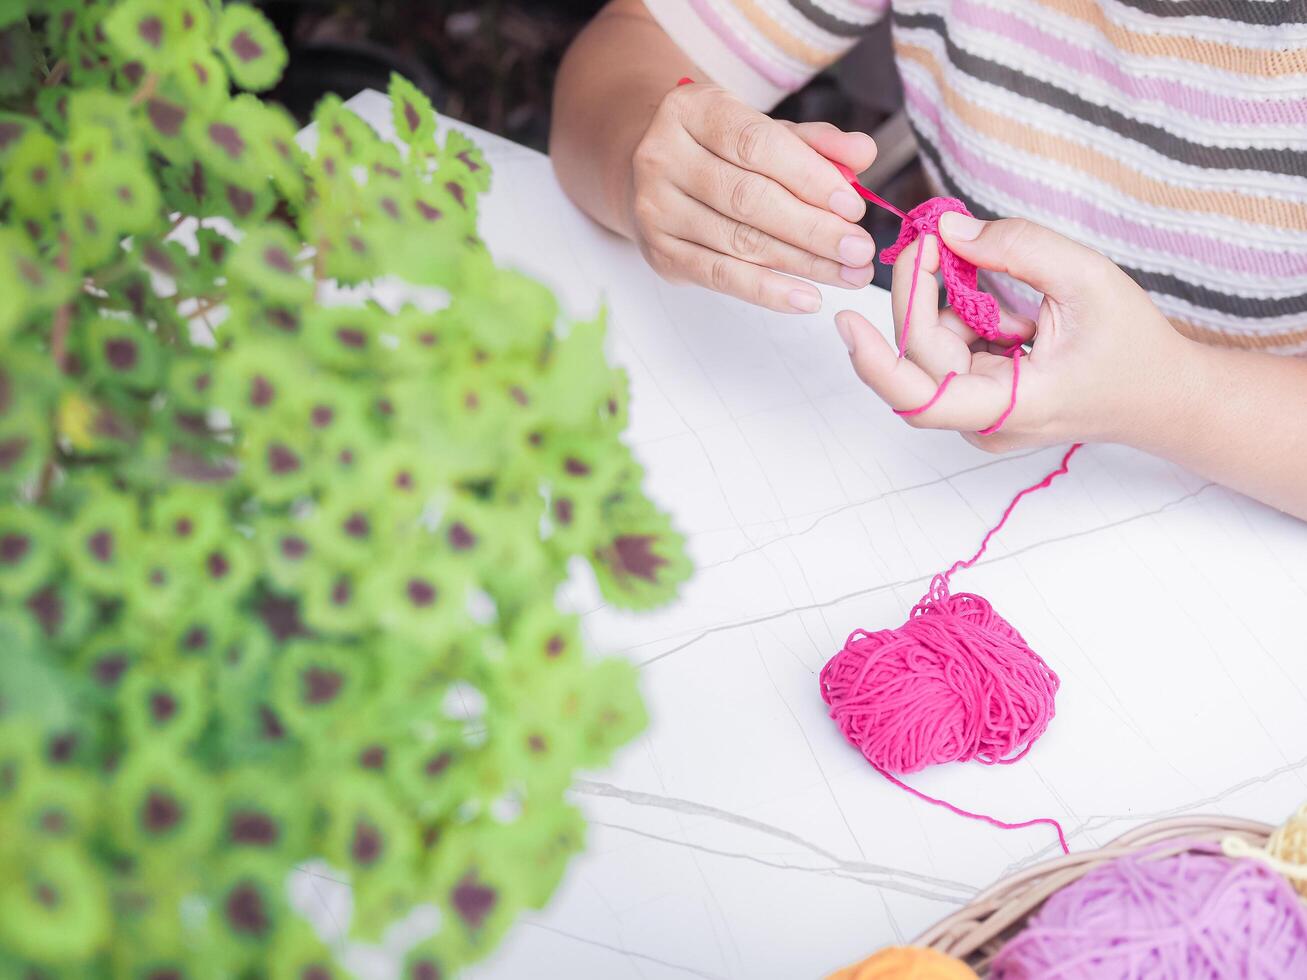 detailopname van vrouw hand- breiwerk met roze wol foto